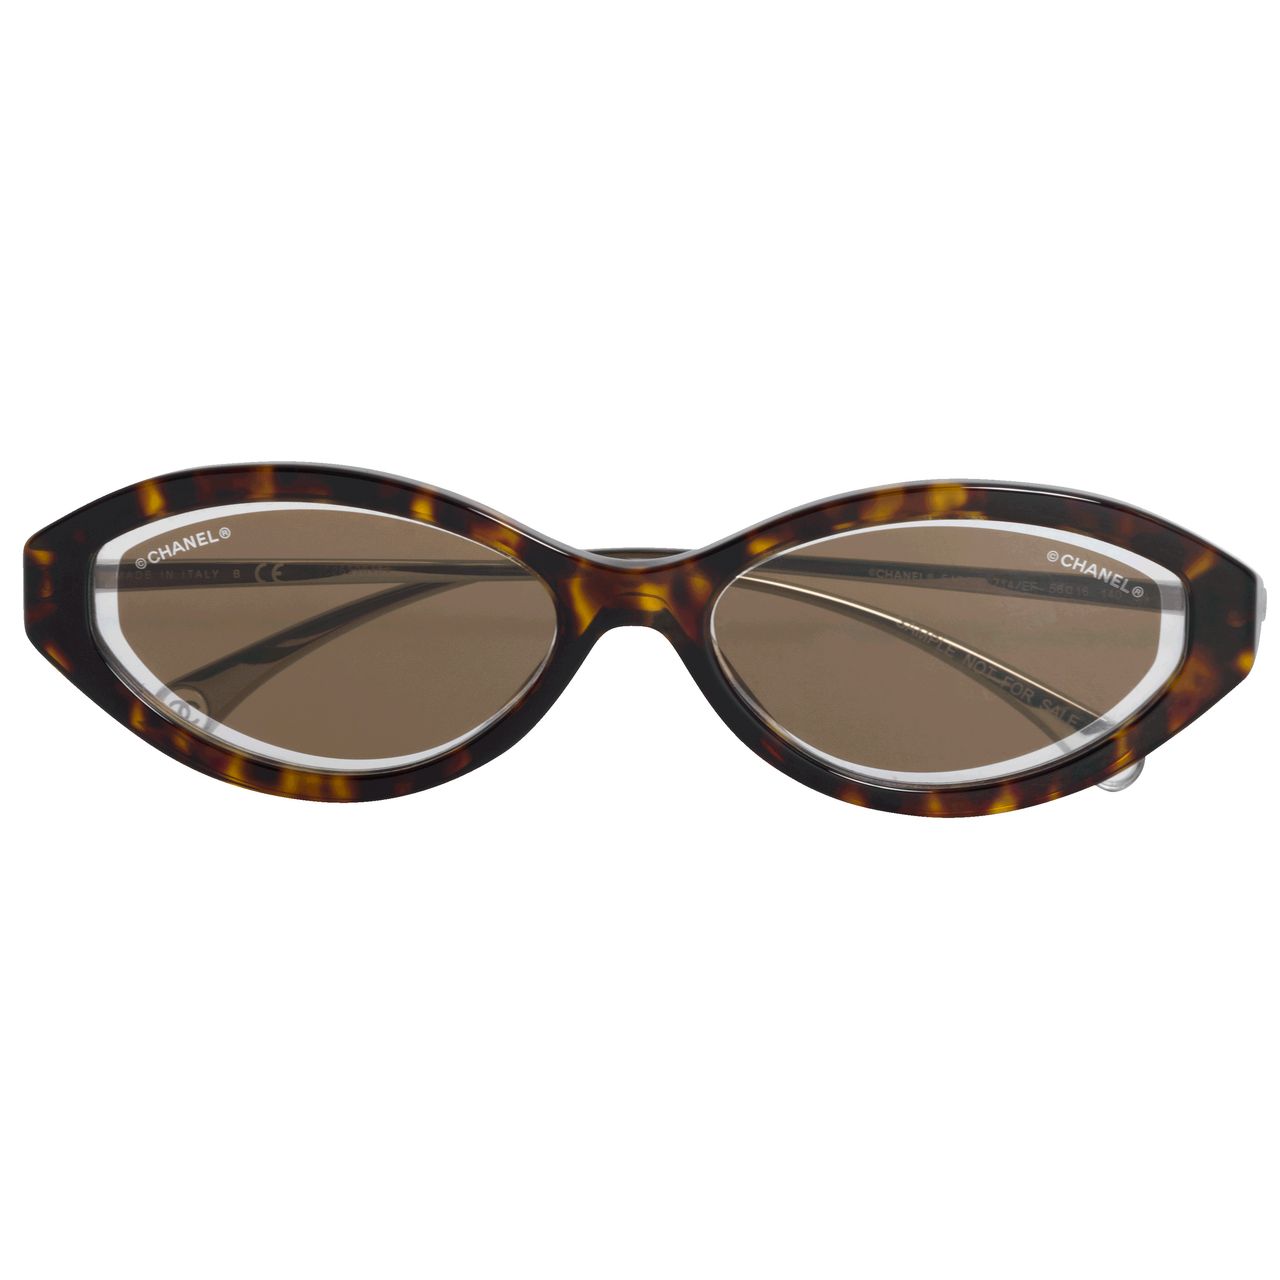 Chanel Black Vintage Chain Link Shield Sunglasses